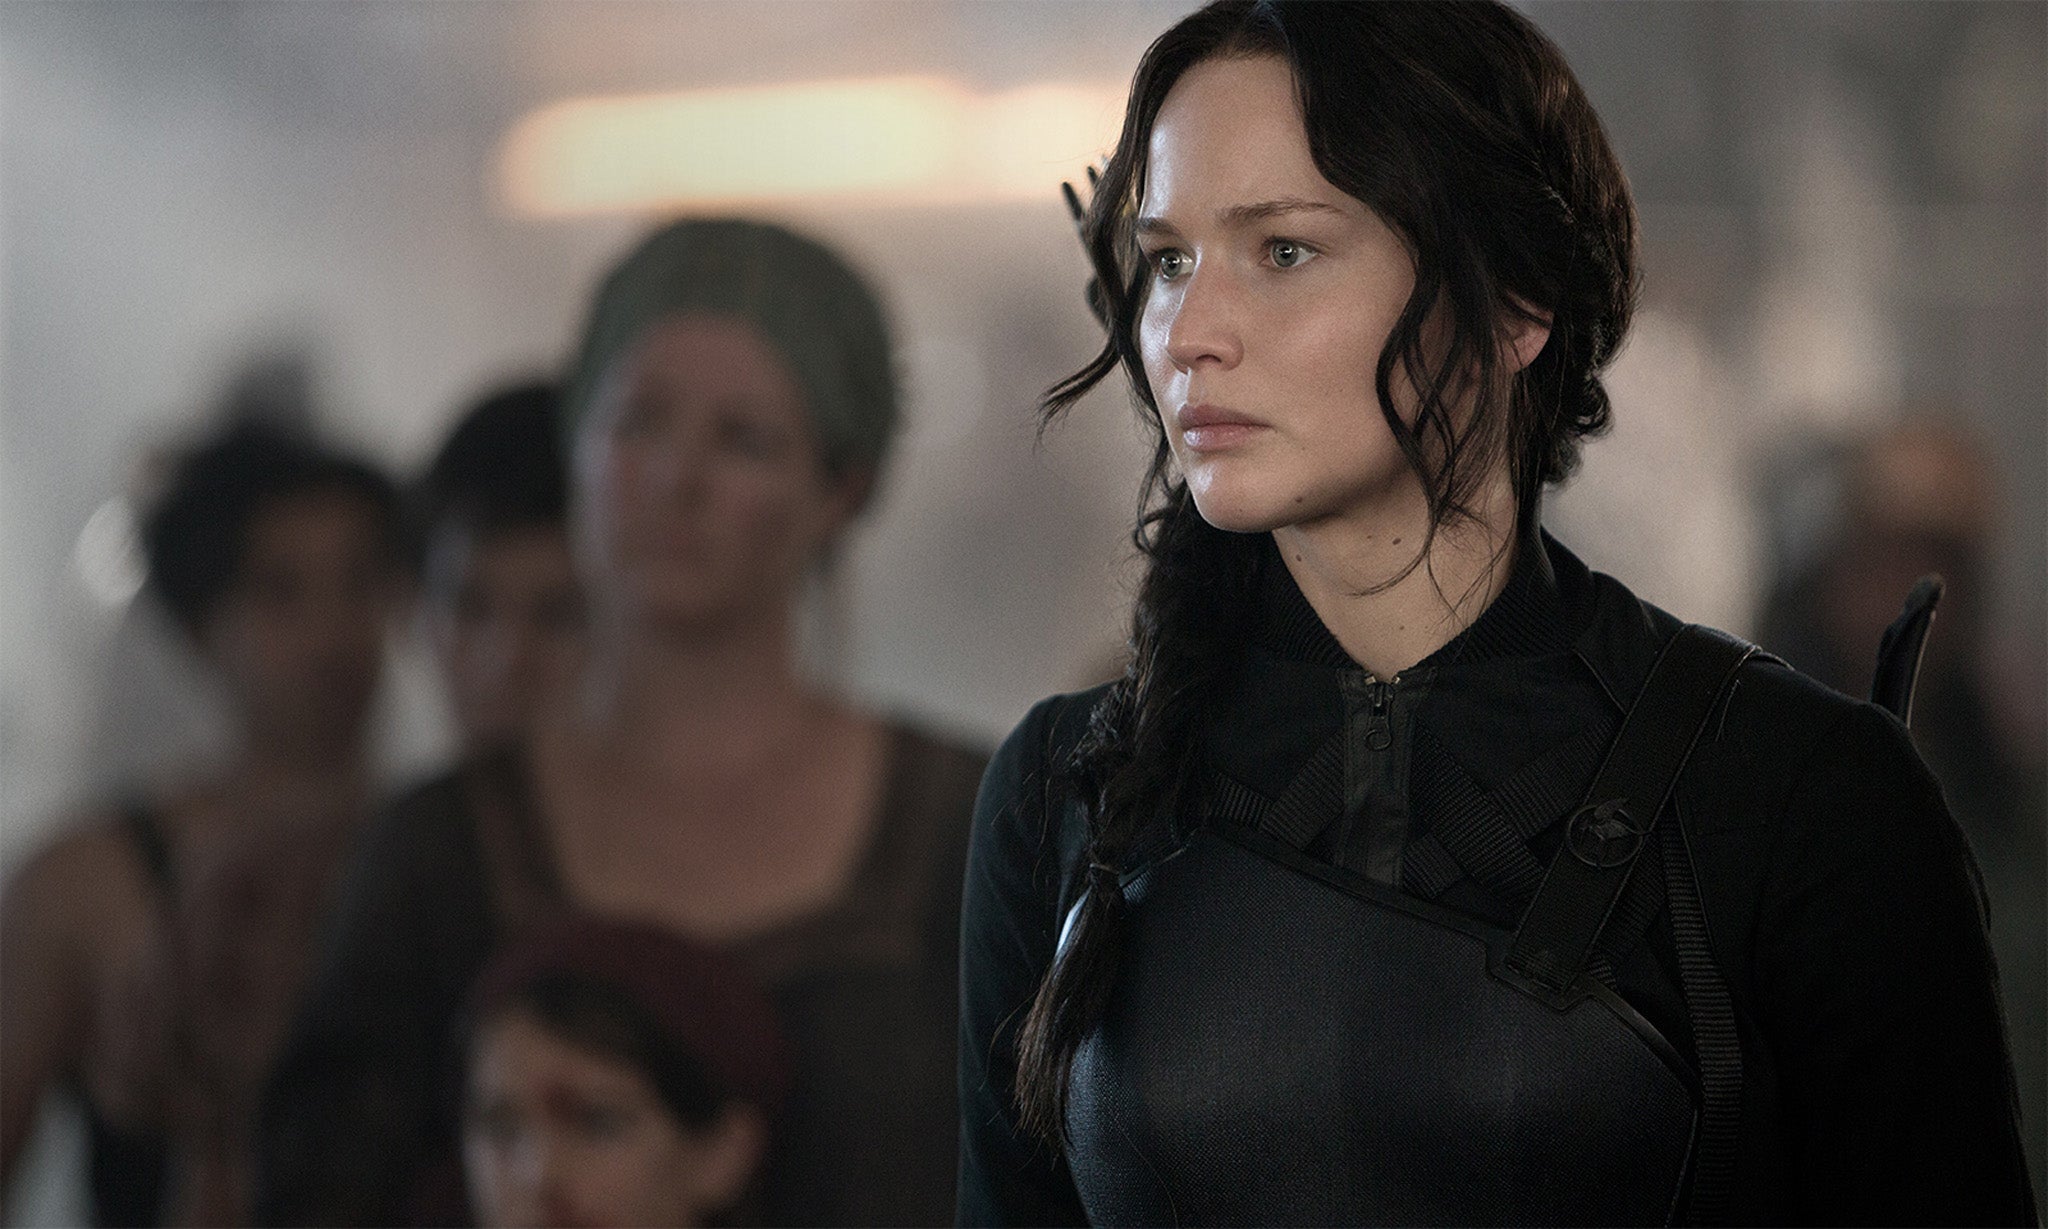 Jennifer Lawrence plays Katniss Everdeen in The Hunger Games: Mockingjay Part 1